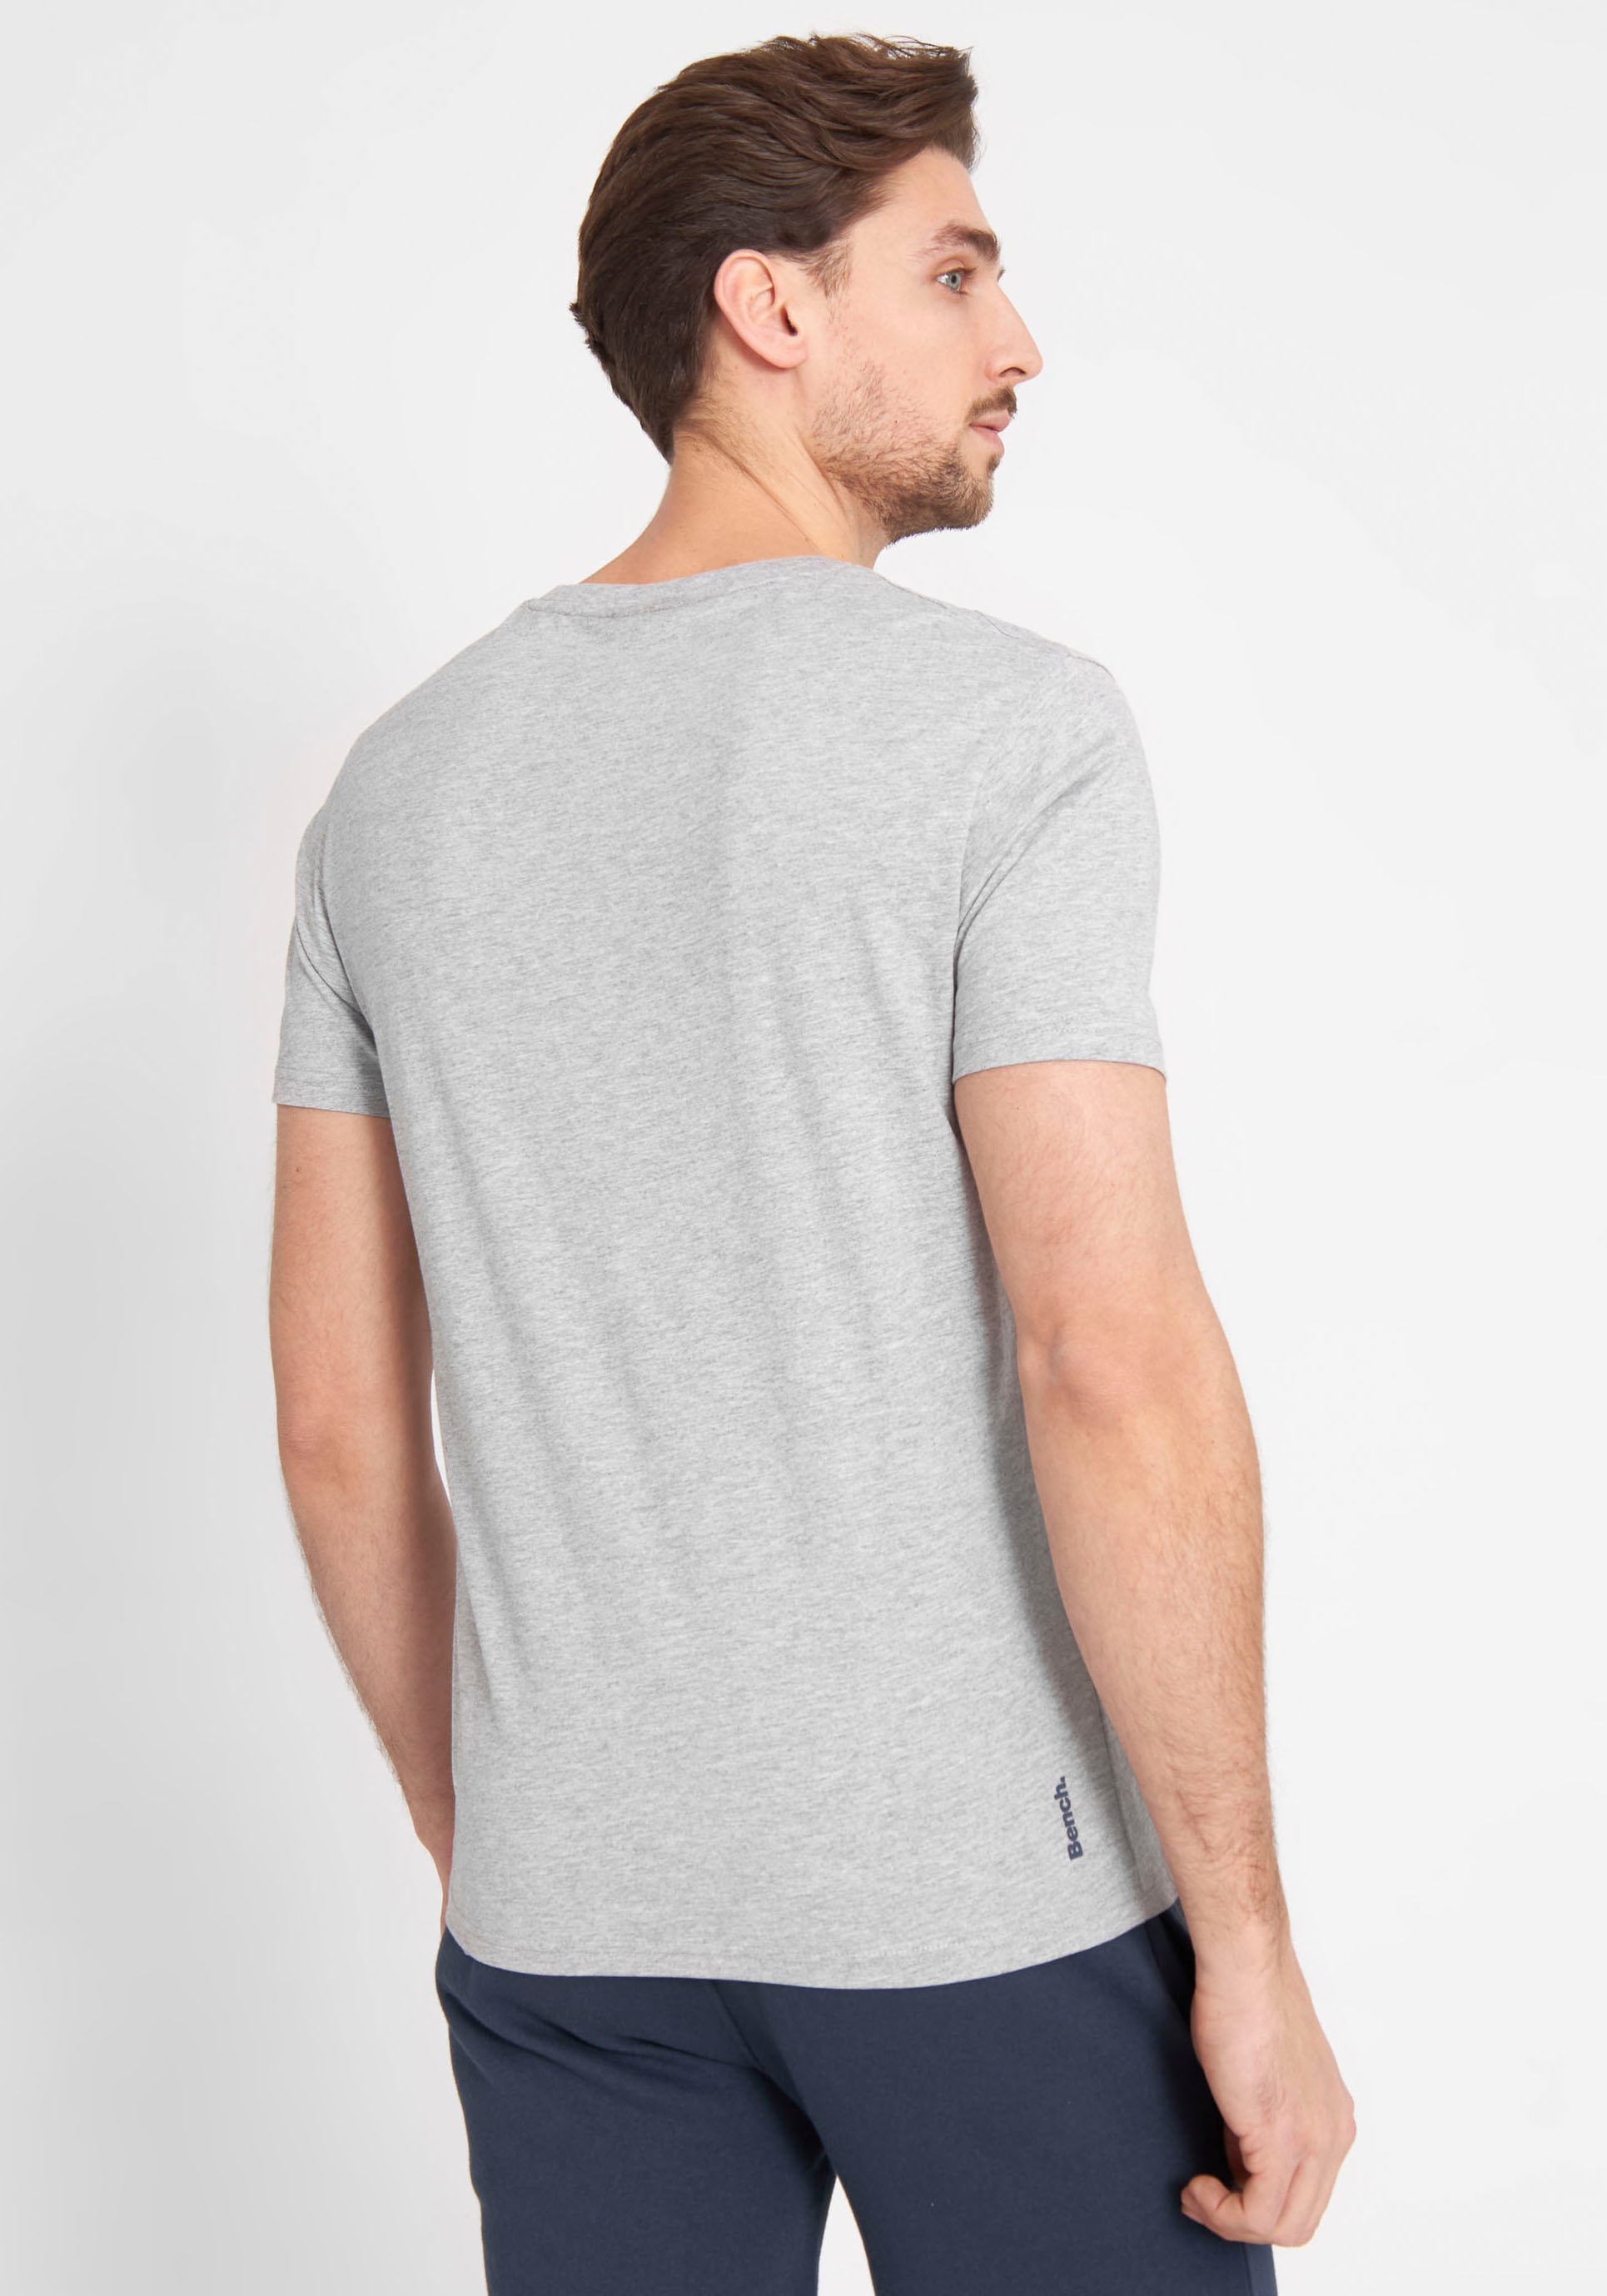 Bench. T-Shirt »LEANDRO«